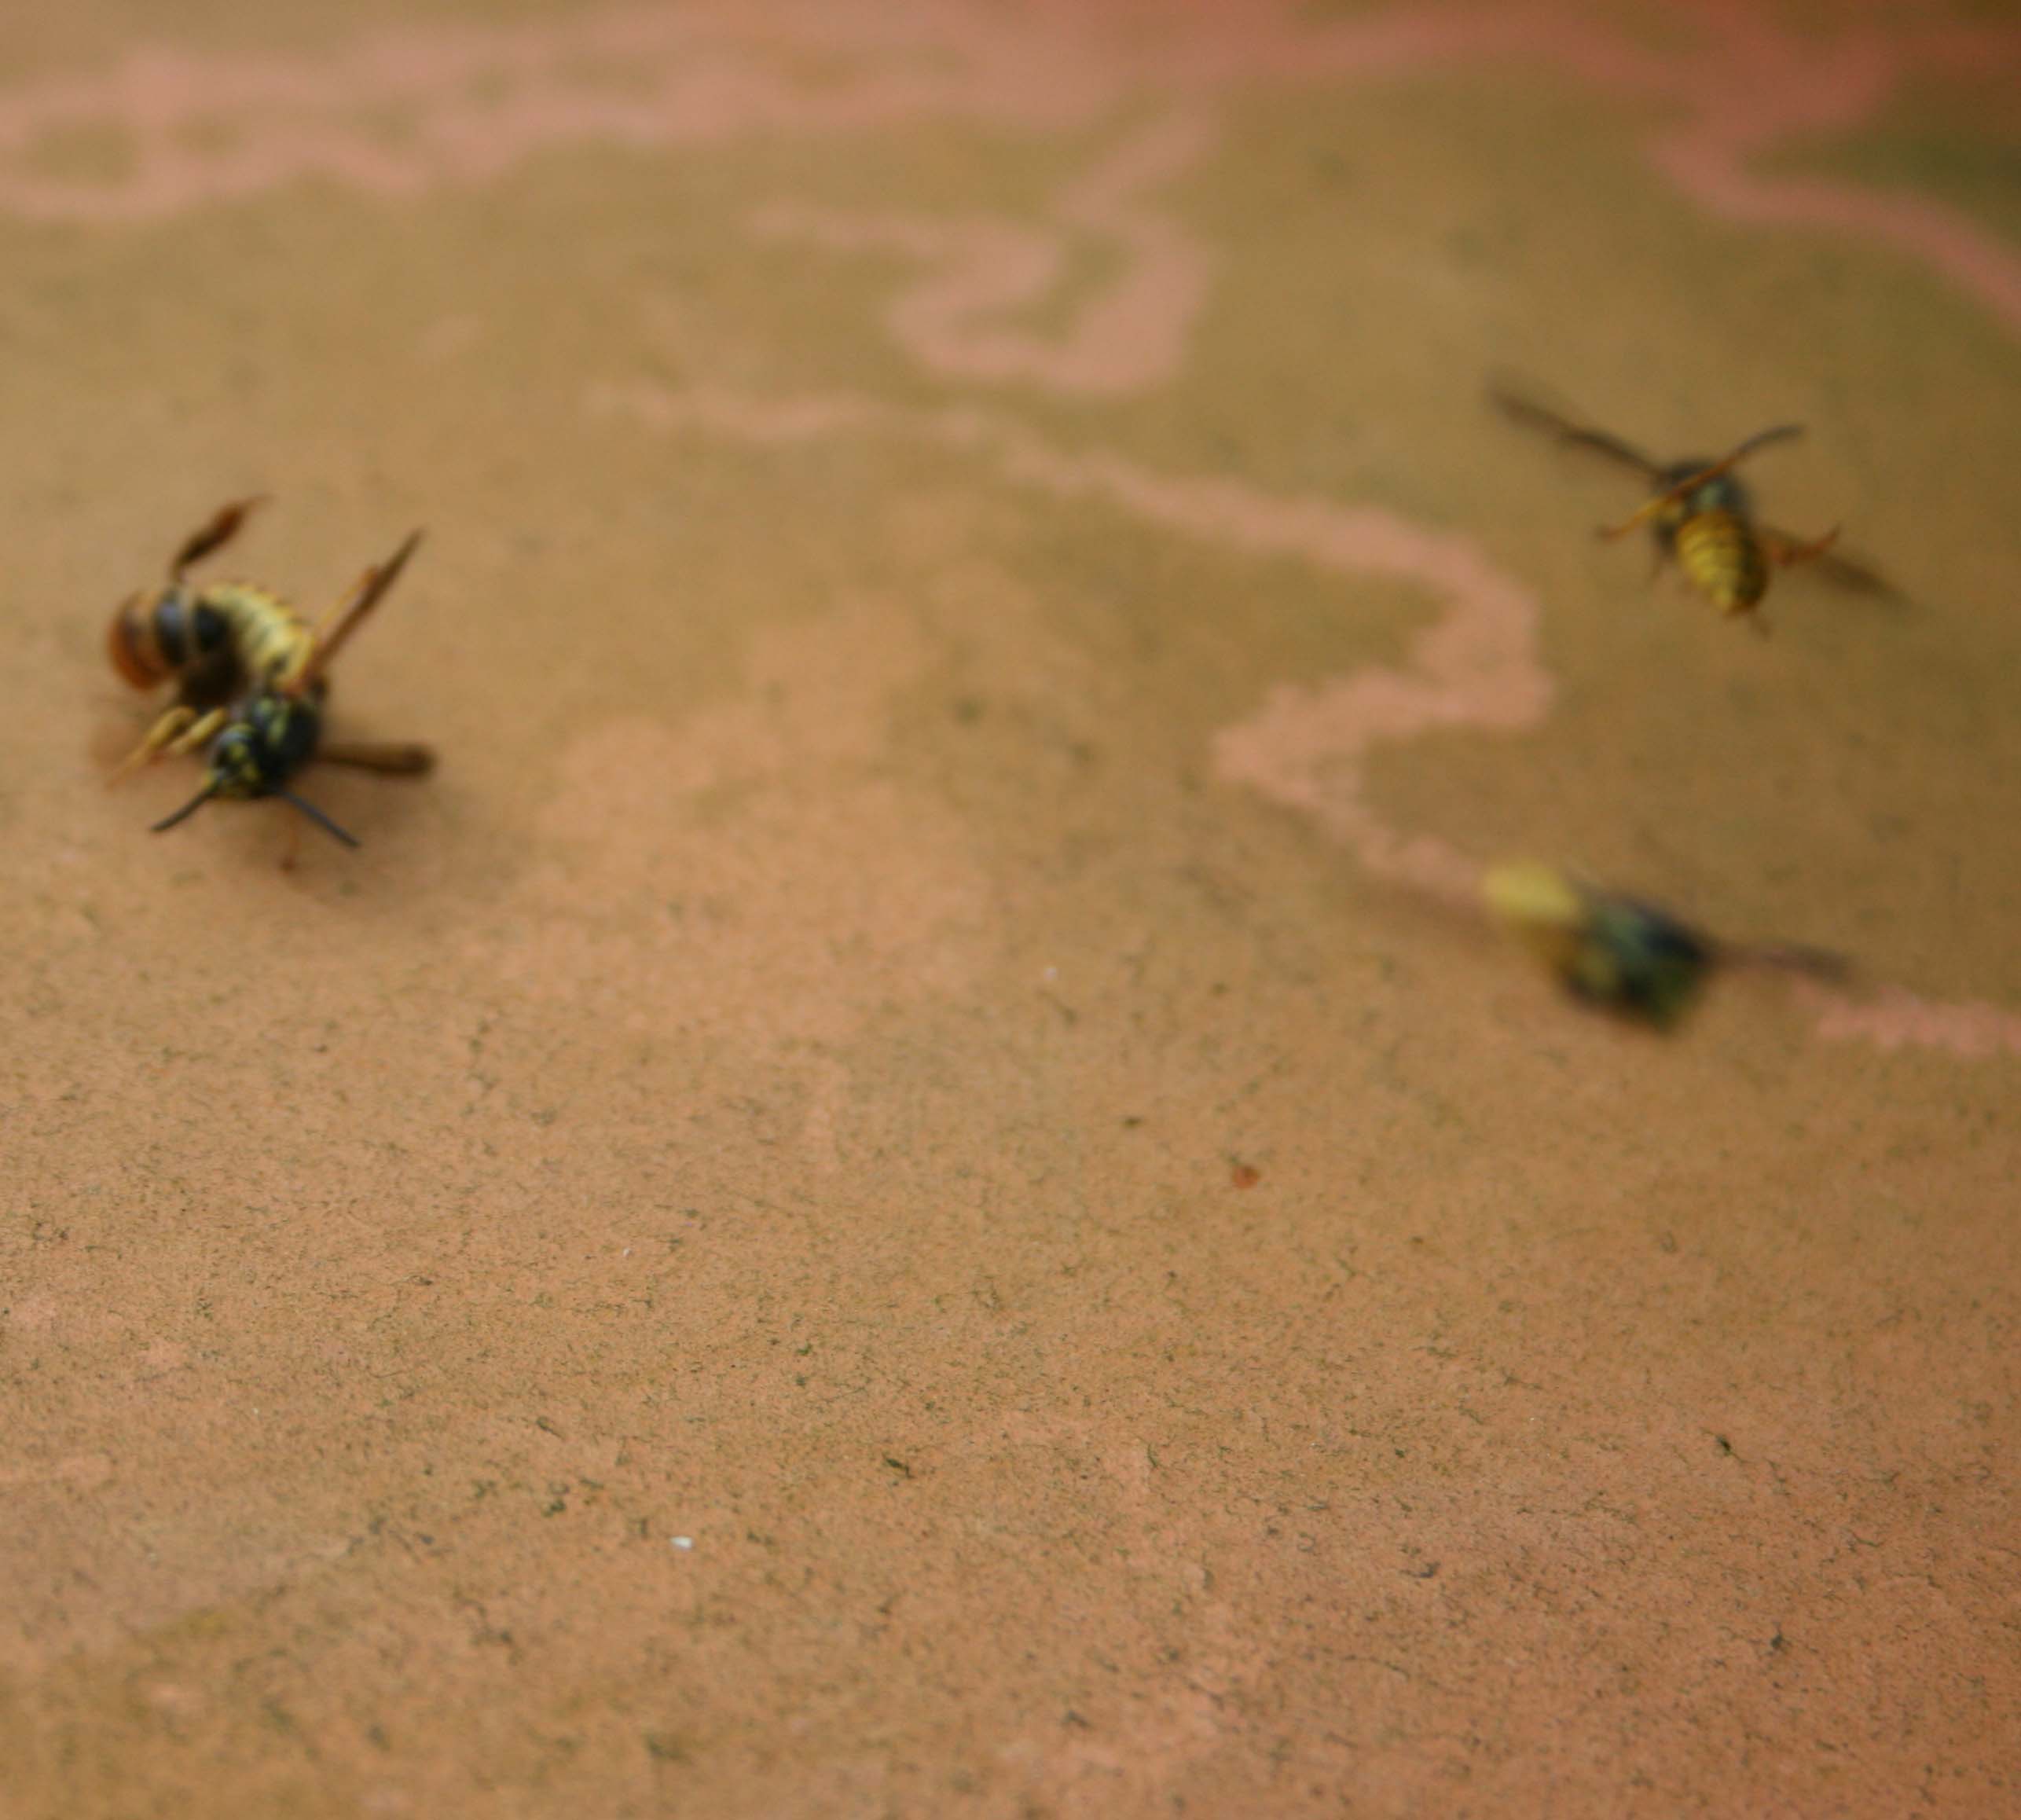 wasps-attacking-bees 020a.jpg